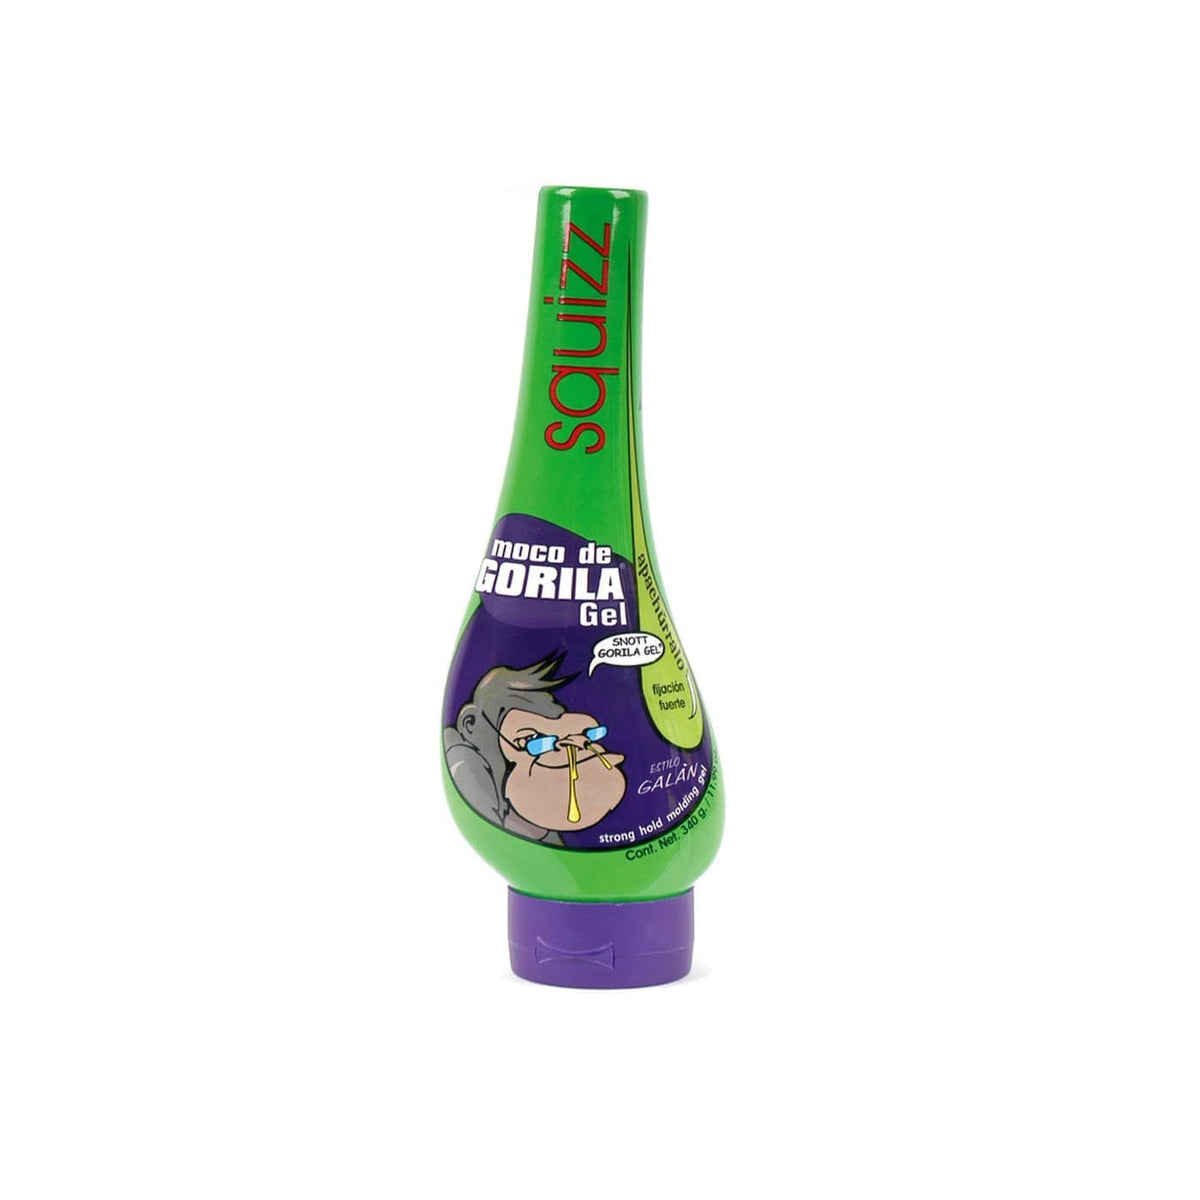 Moco De Gorila Hair Styling Gel Squeeze Gorilla Snot Gel 11.9oz